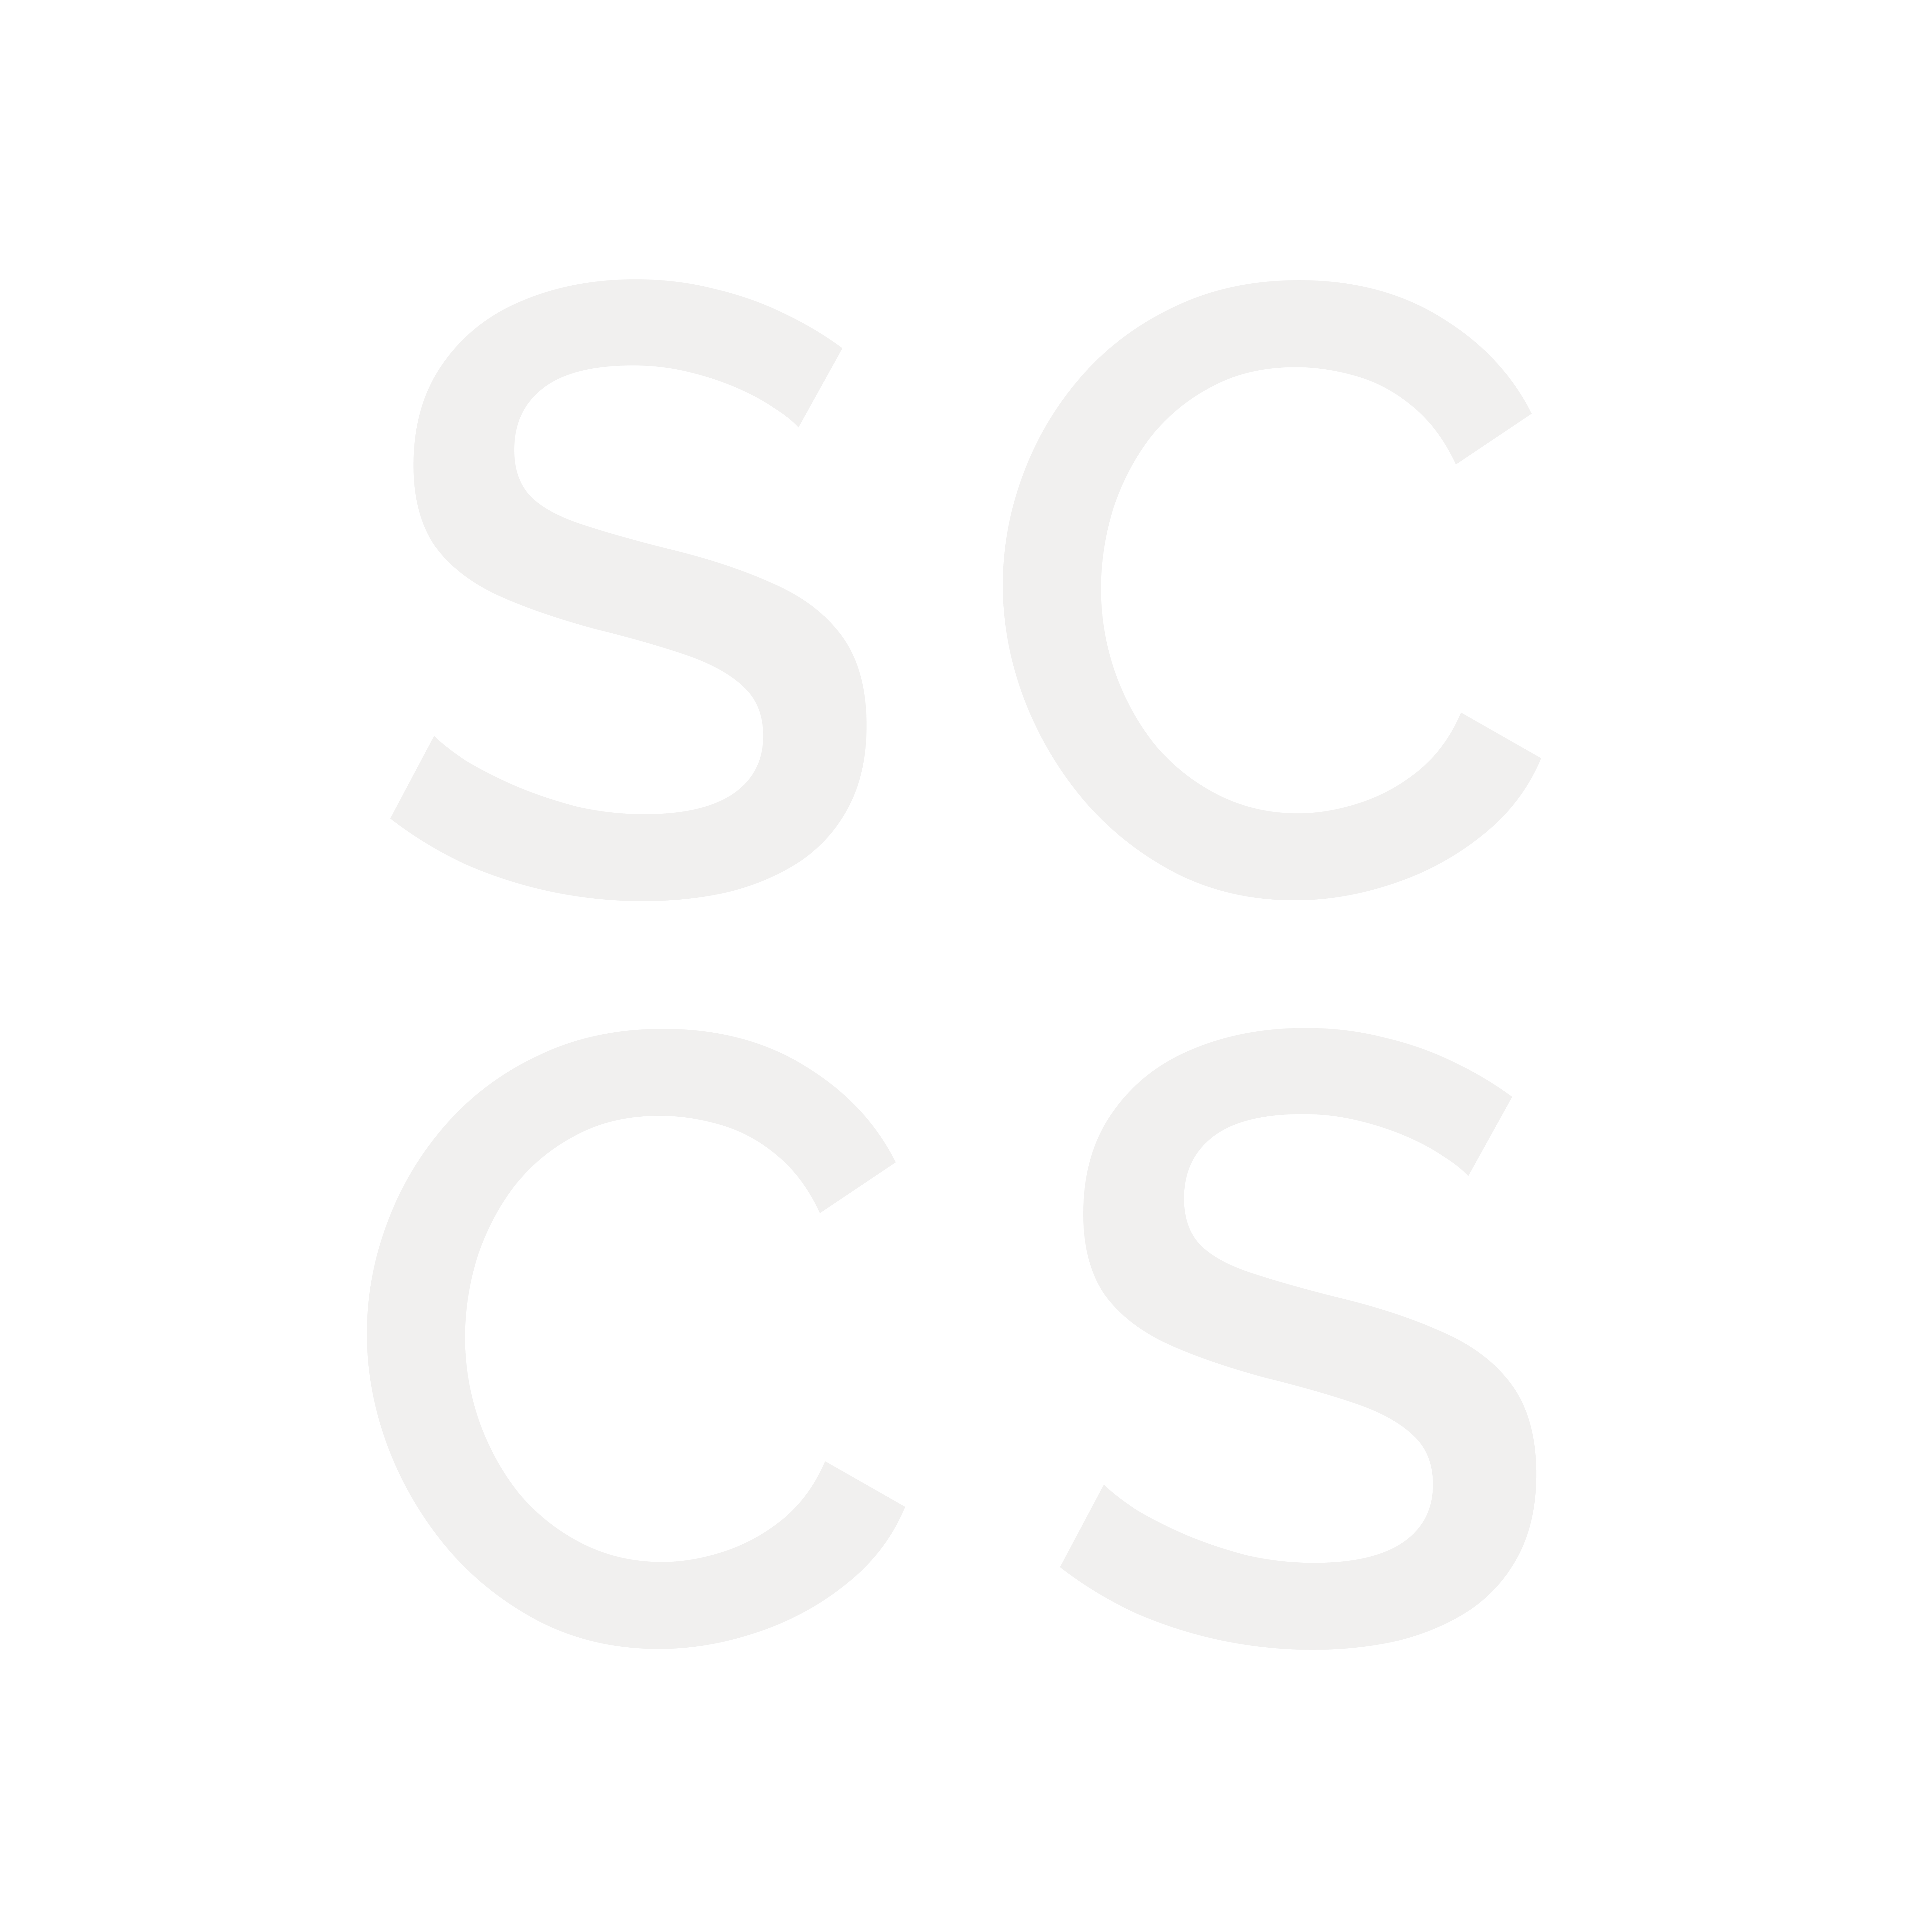 SCCS Sites